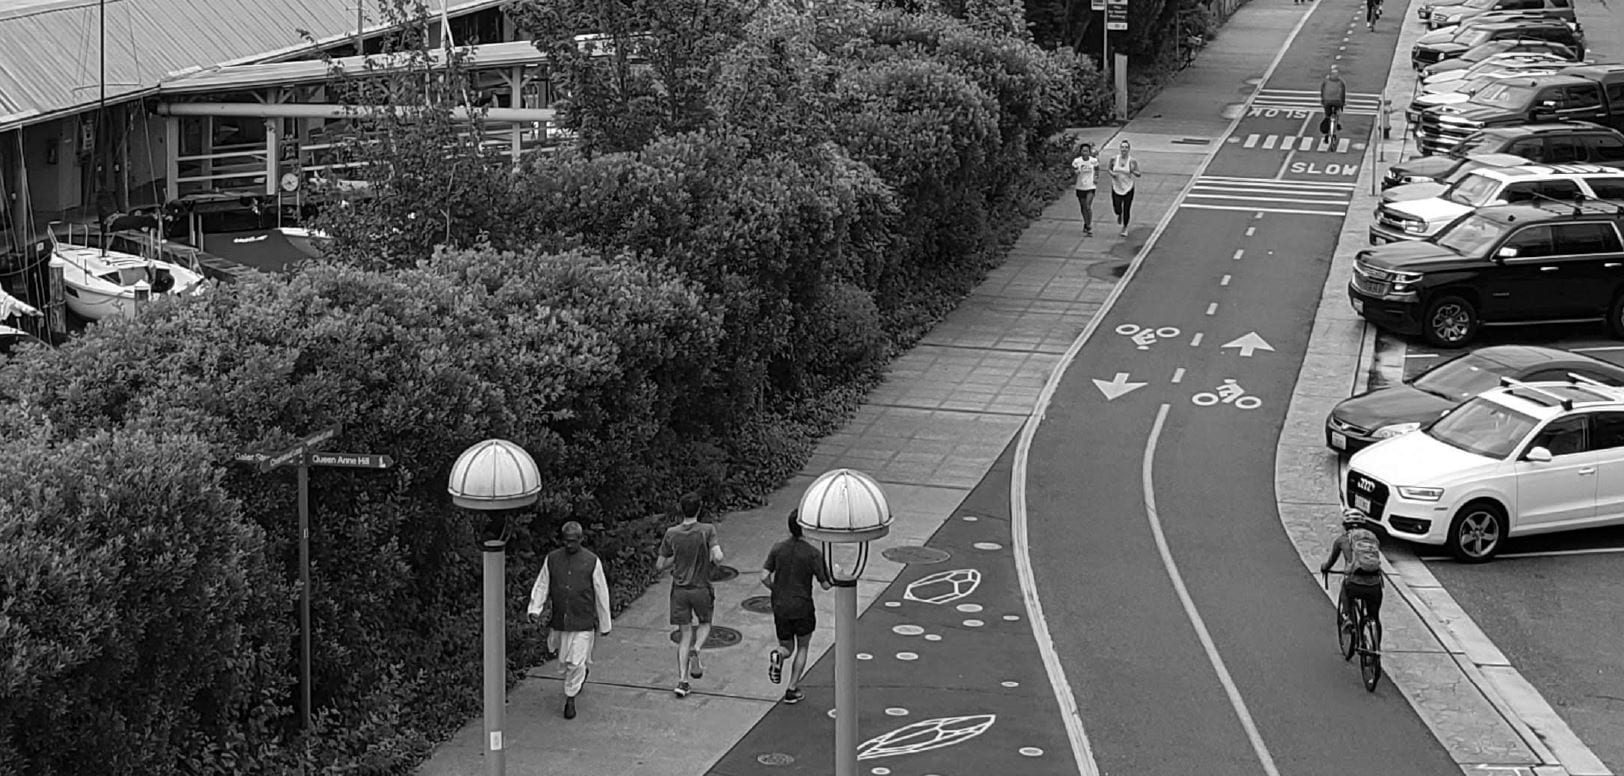 Pedestrians and bikers using protected sidewalks and bike lanes.